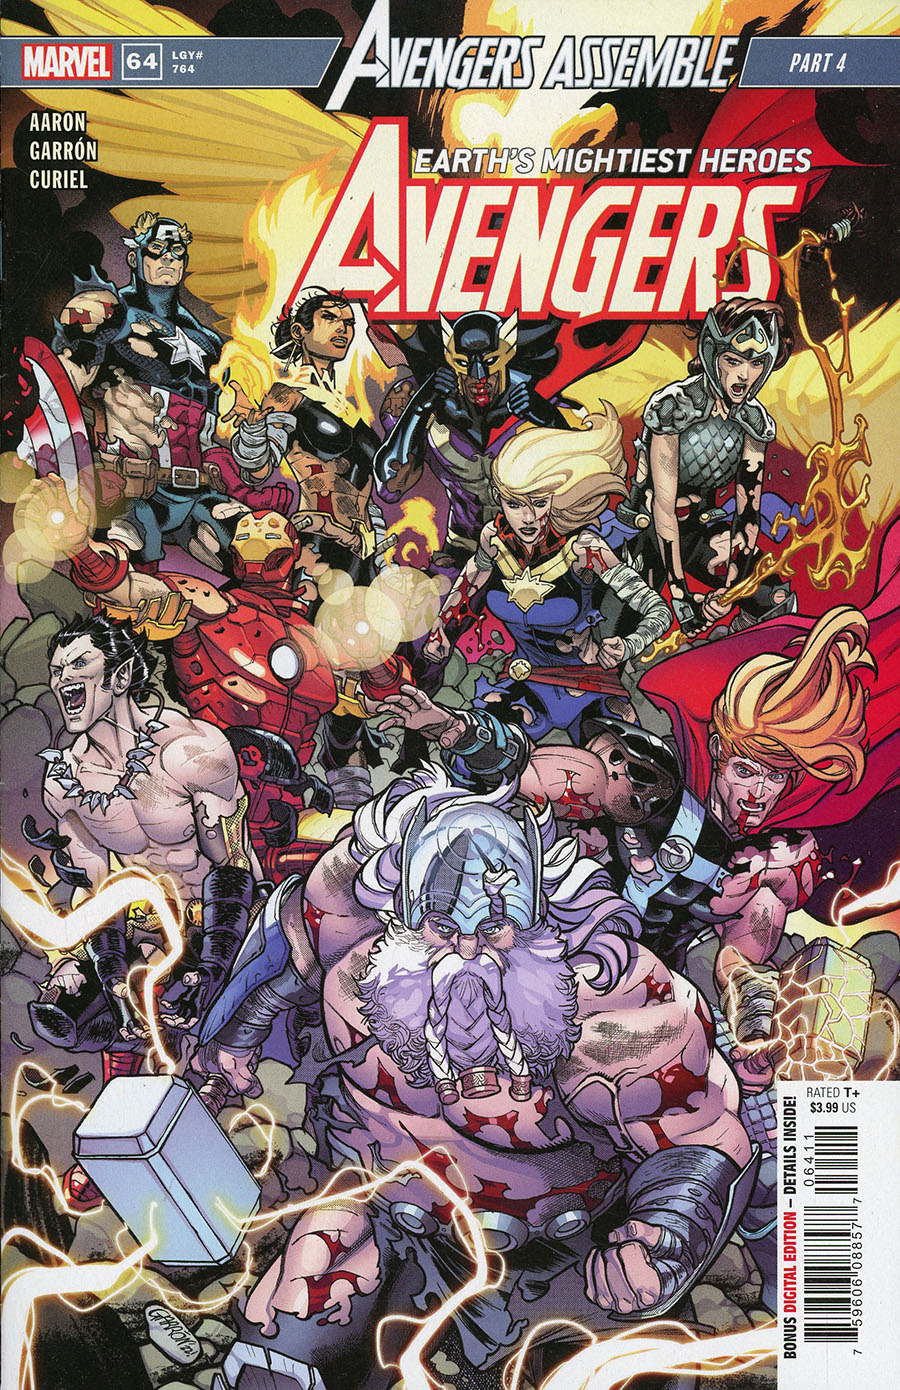 Avengers Vol 7 #64 Cover A Regular Javier Garron Cover (Avengers Assemble Part 4)